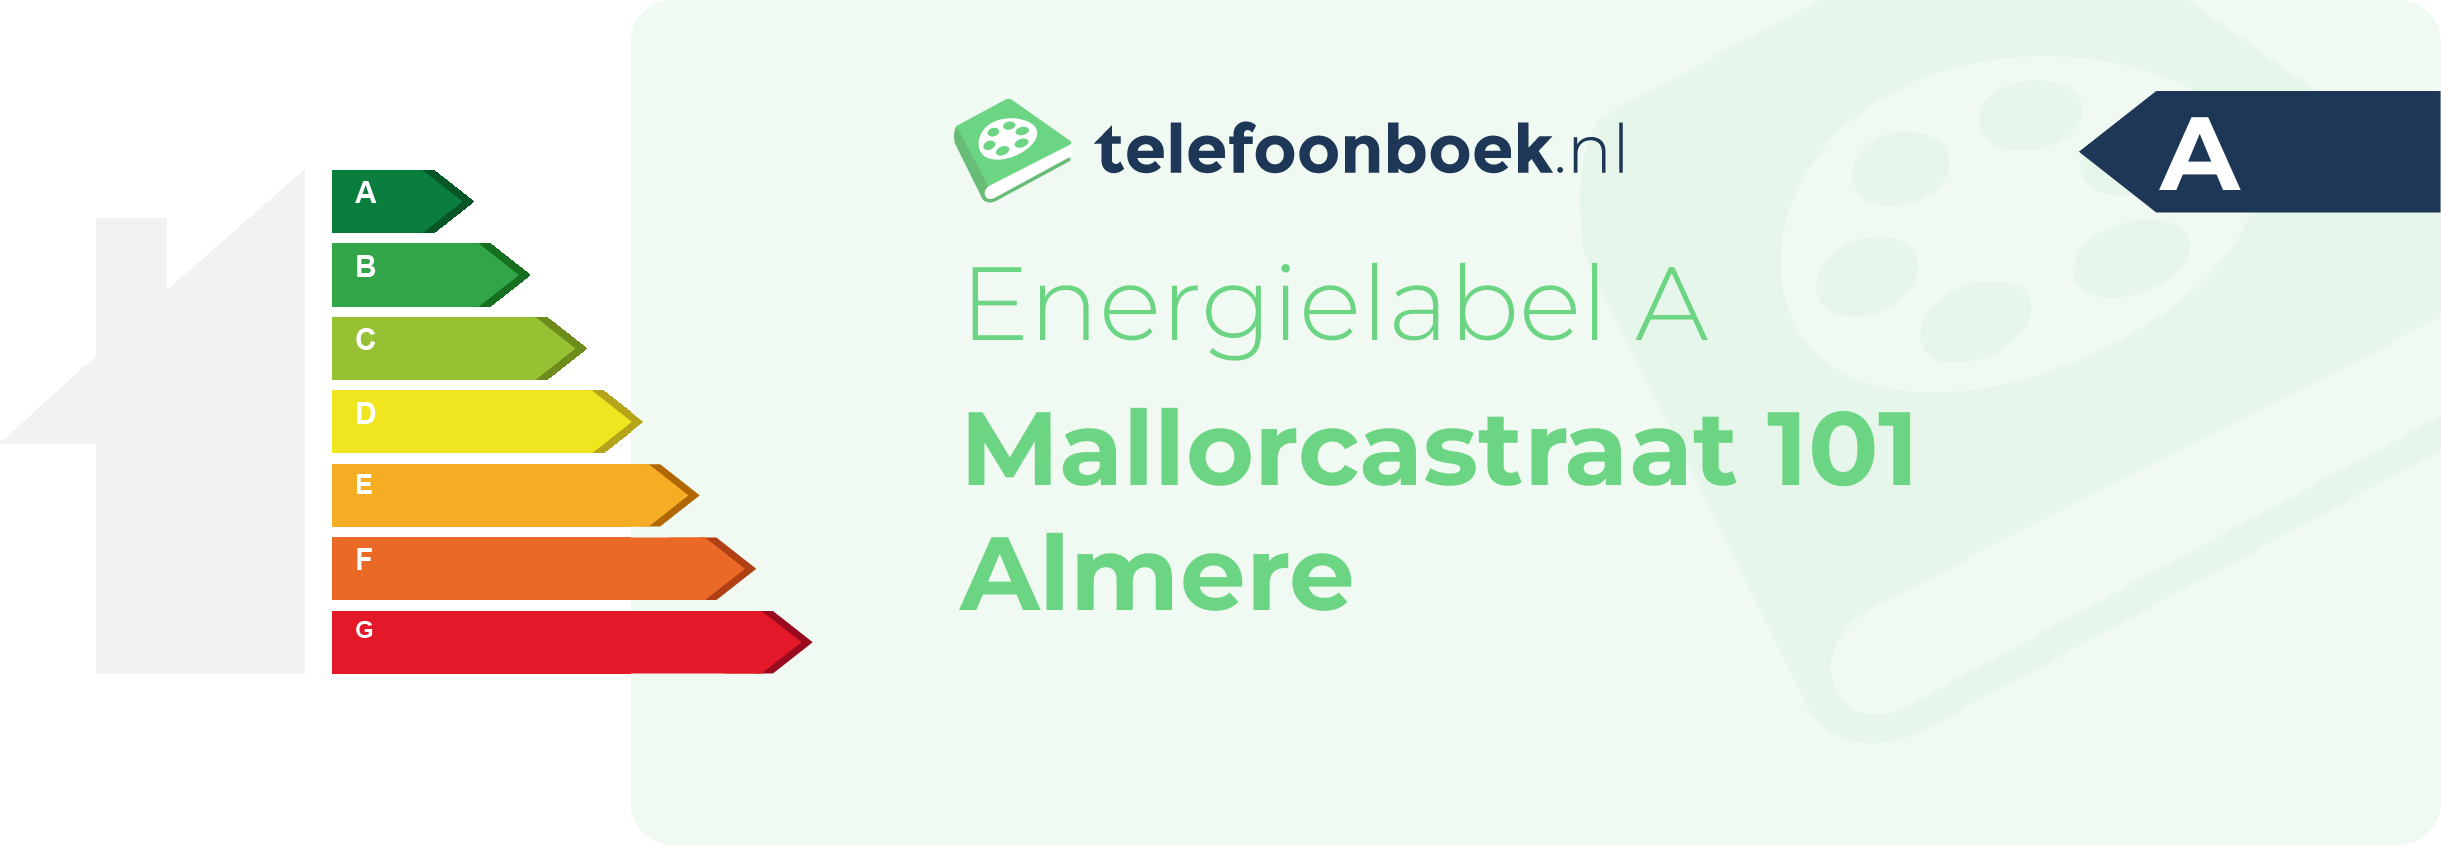 Energielabel Mallorcastraat 101 Almere